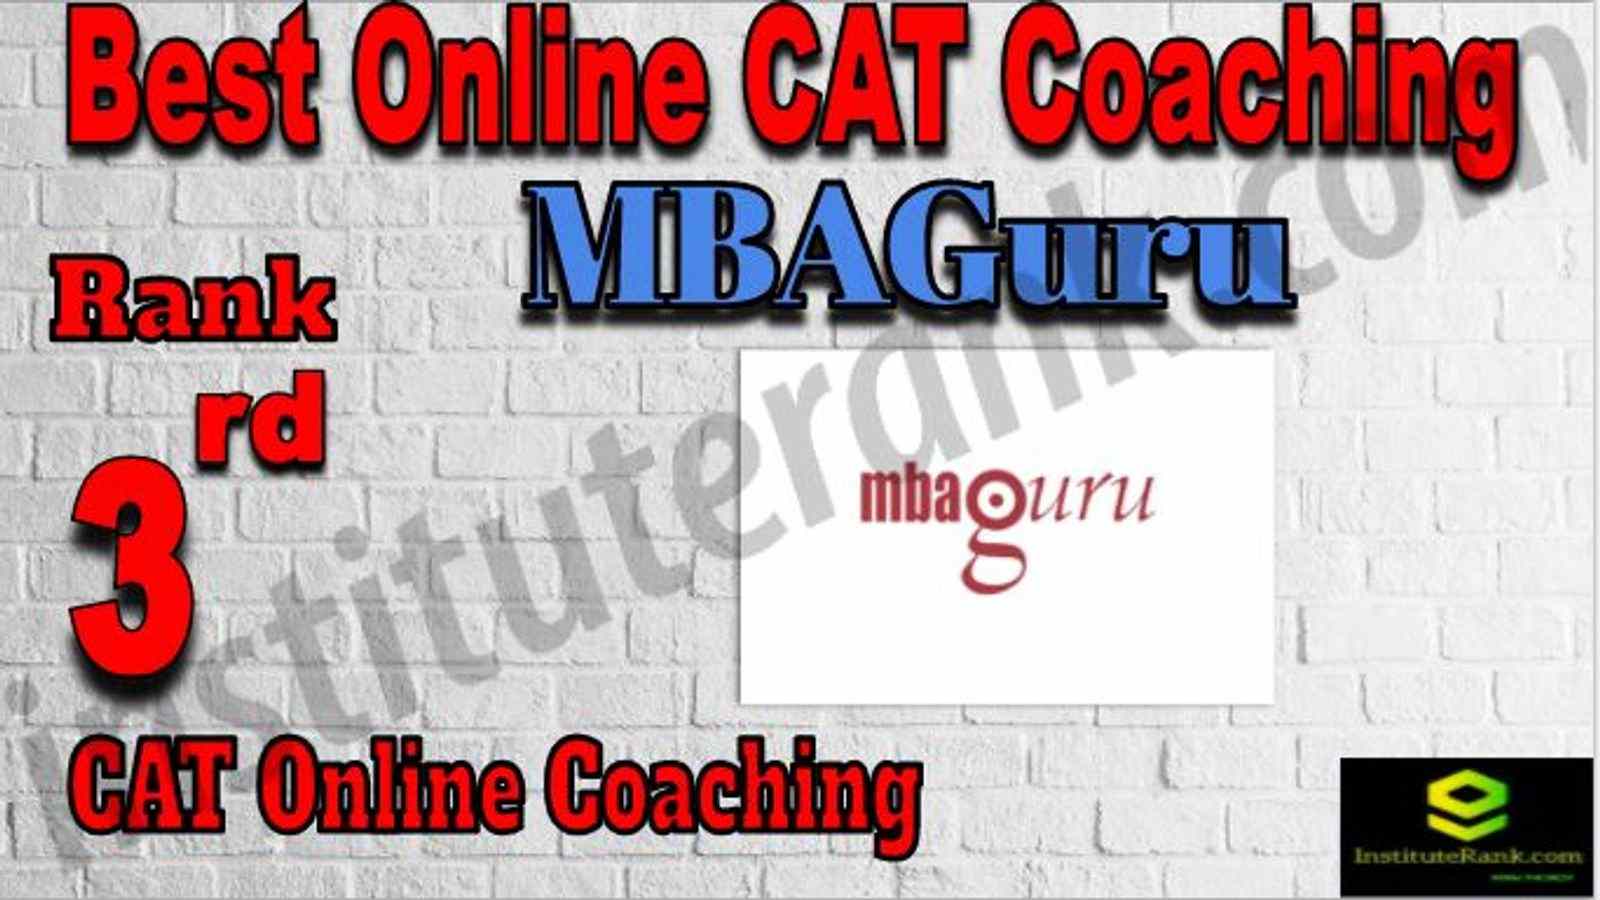 Rank 3 Best Online CAT Coaching